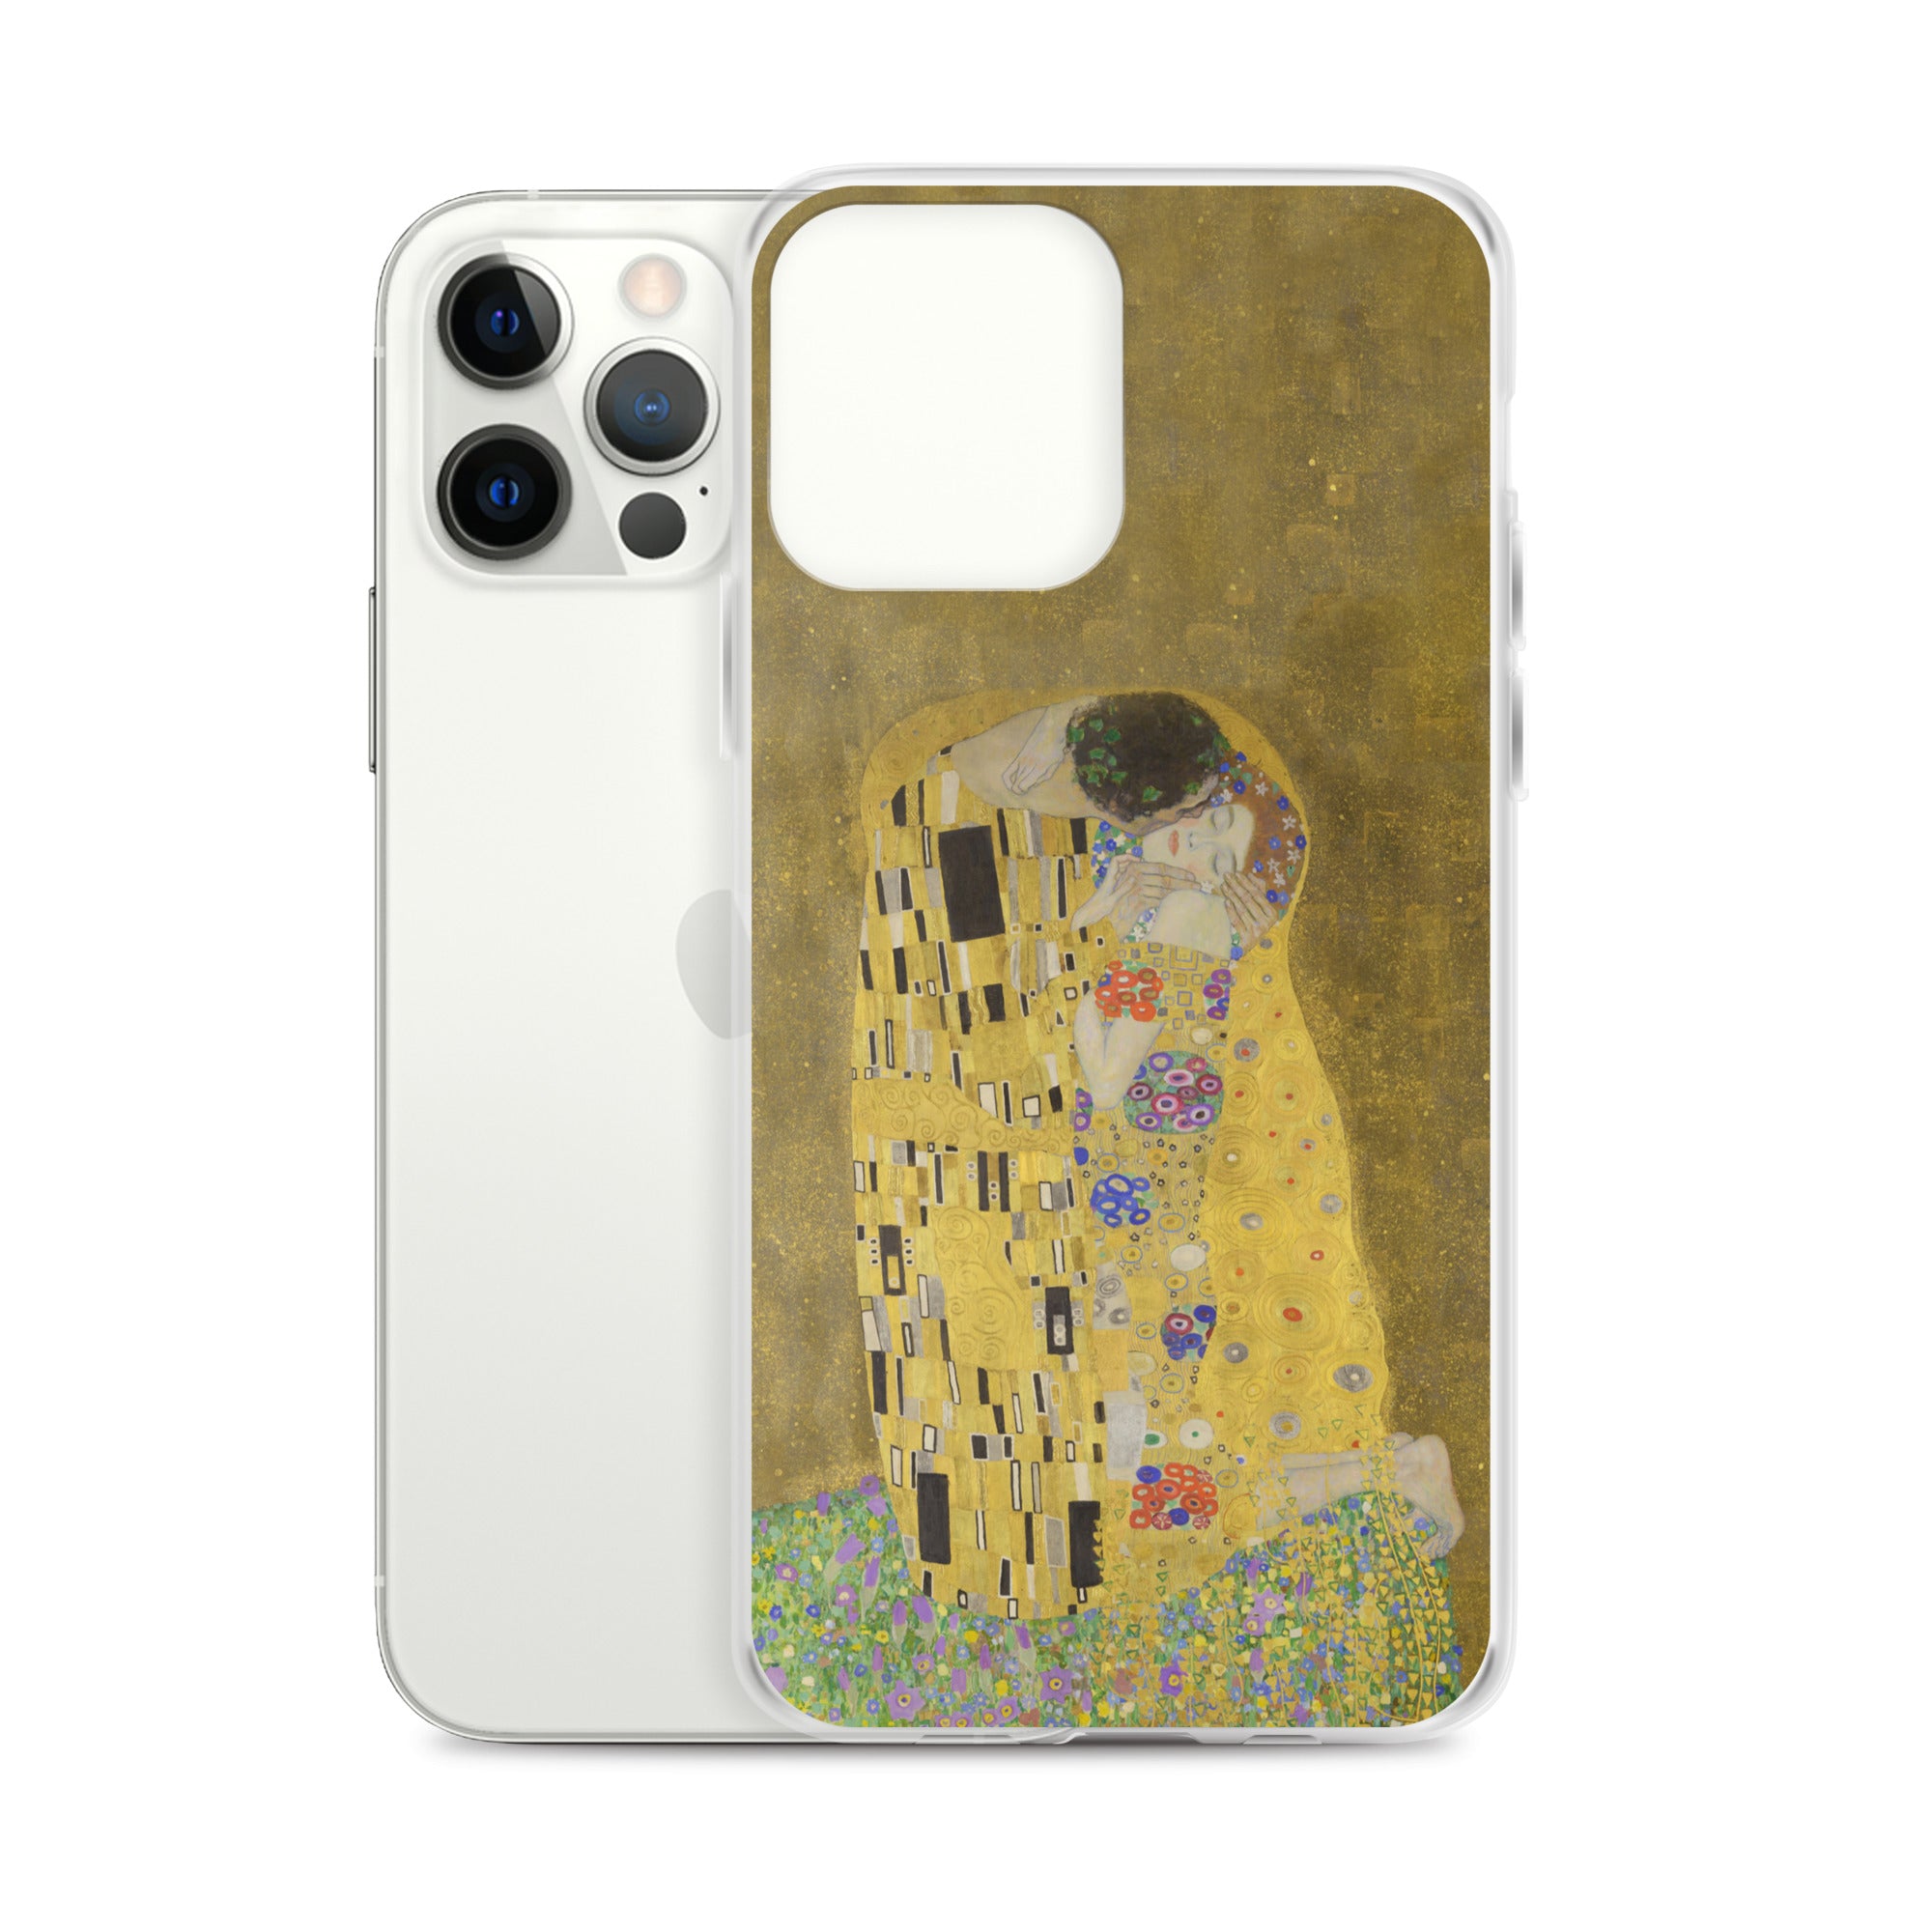 Gustav Klimt „Der Kuss“ Berühmtes Gemälde iPhone® Hülle | Transparente Kunsthülle für iPhone®